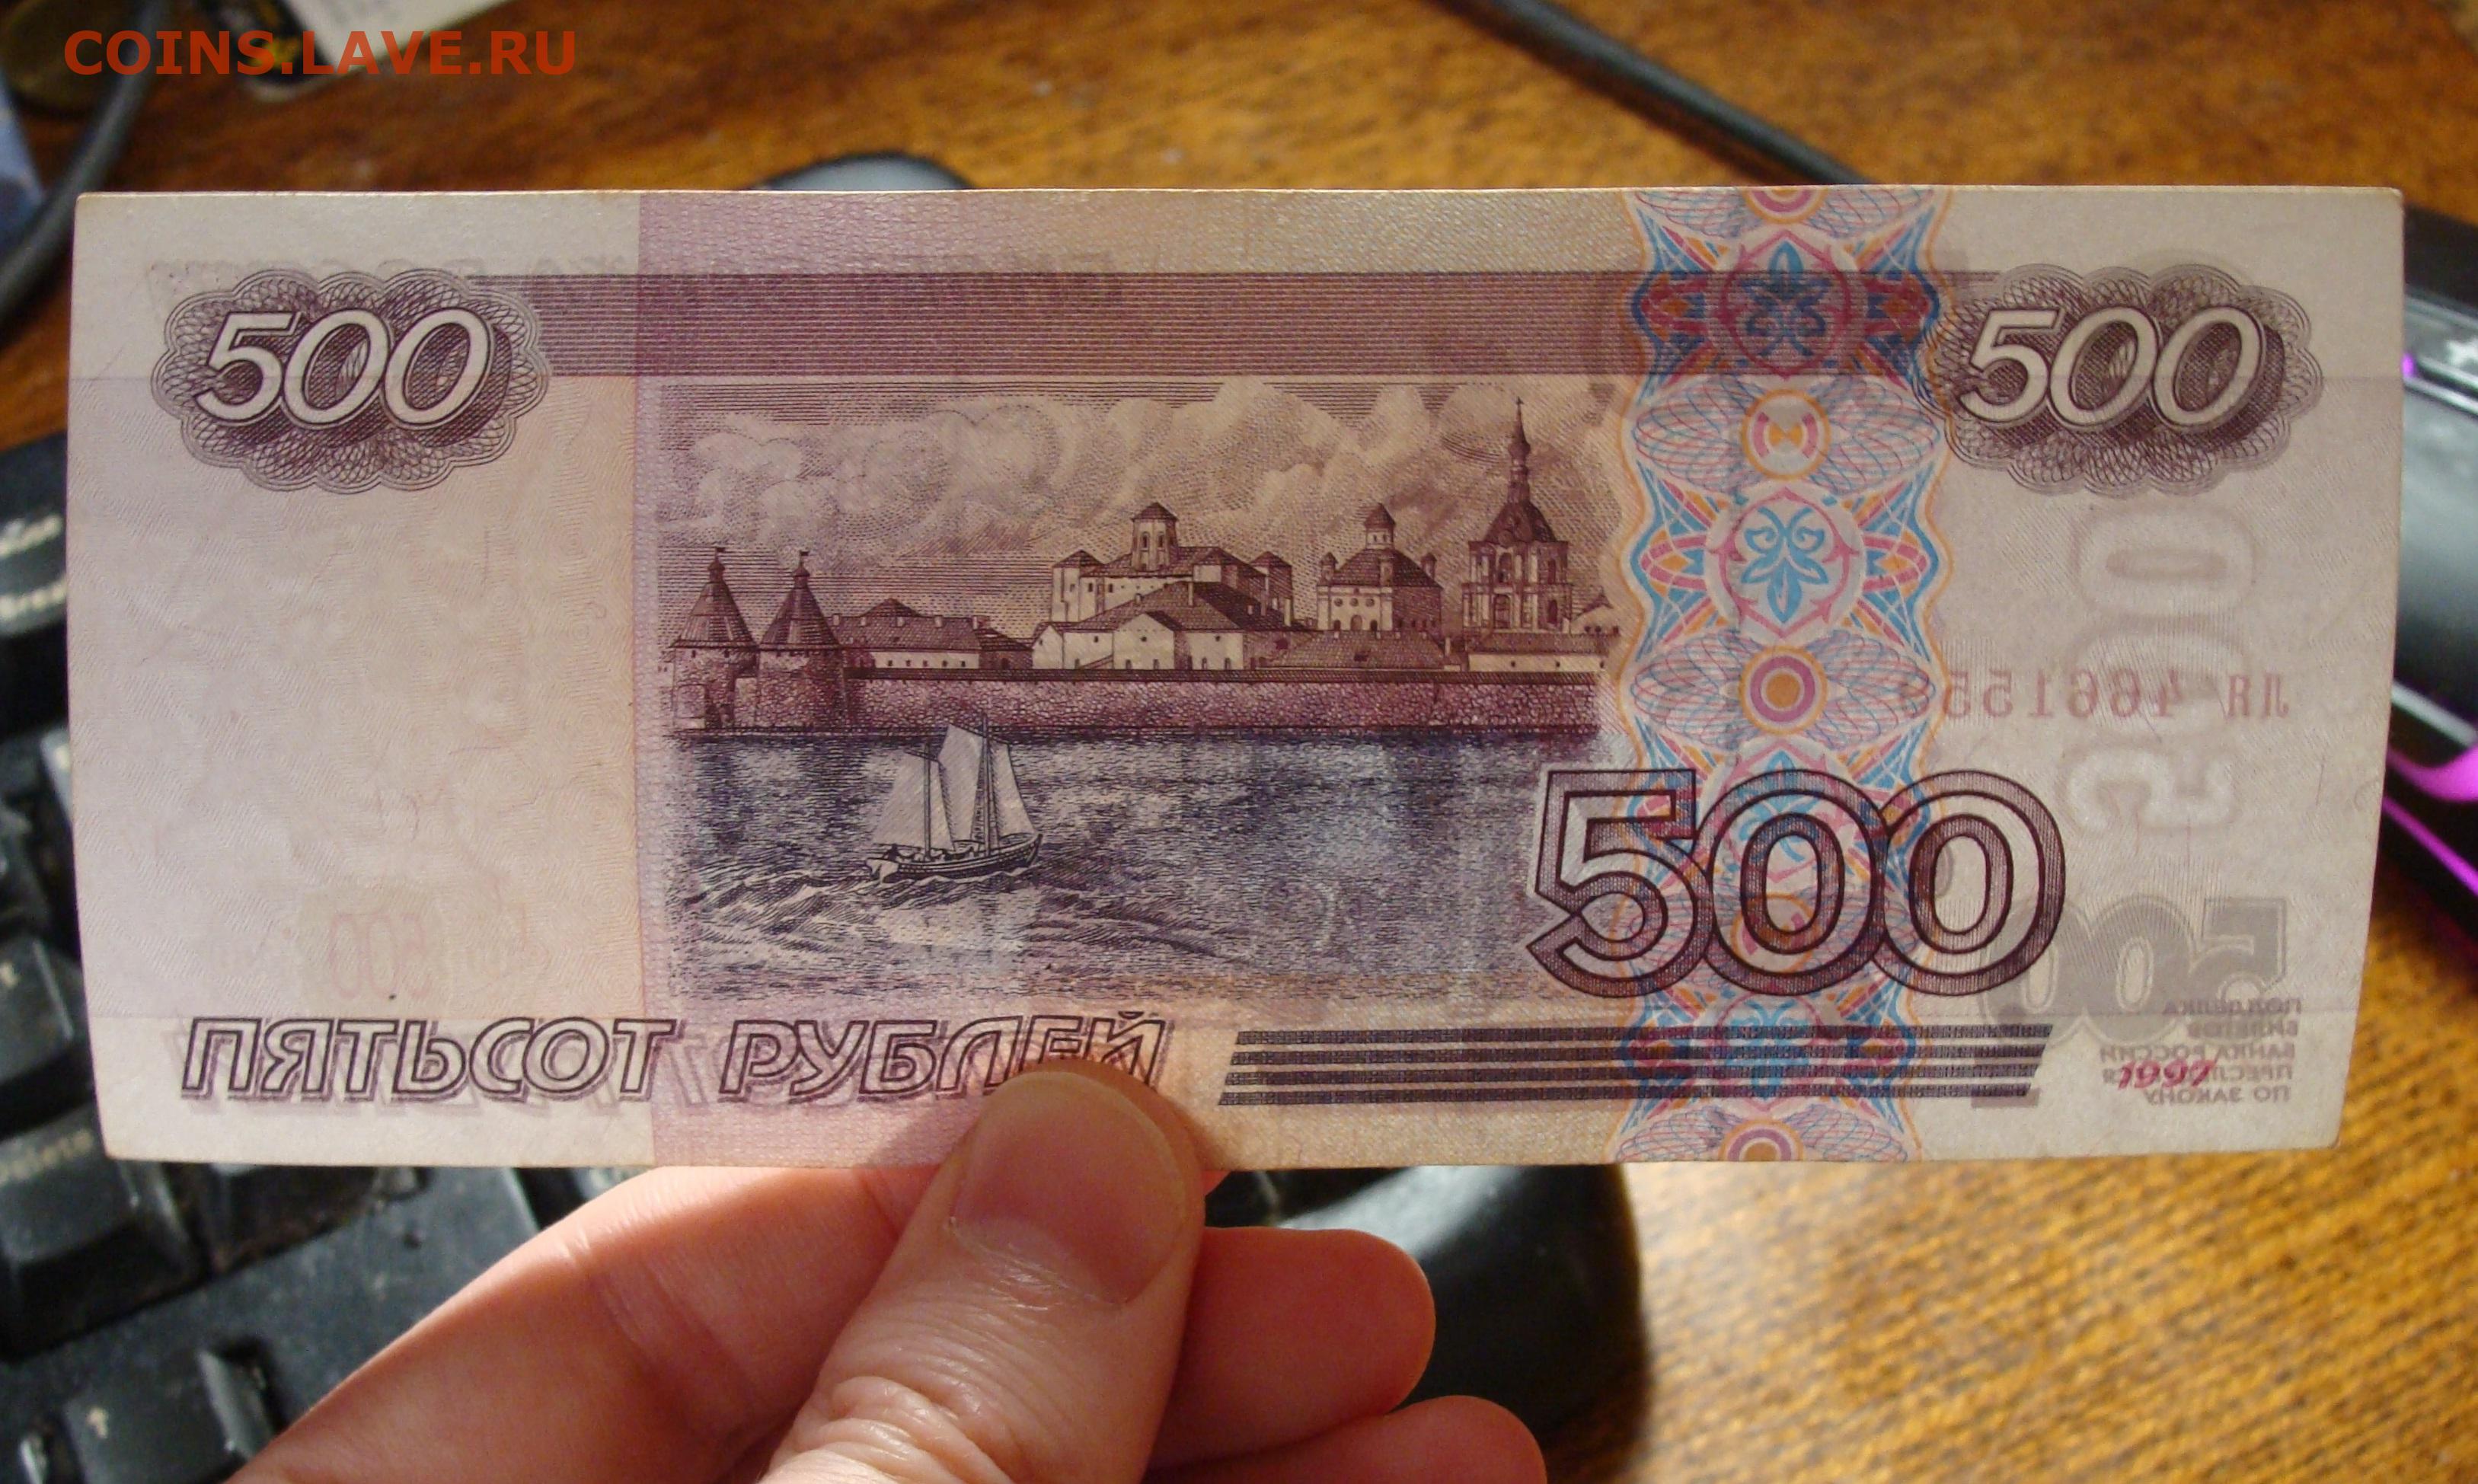 500 рублей казань. 500 Рублей. Купюра 500 рублей. 500 Рублей 1997. 500 Рублей России.